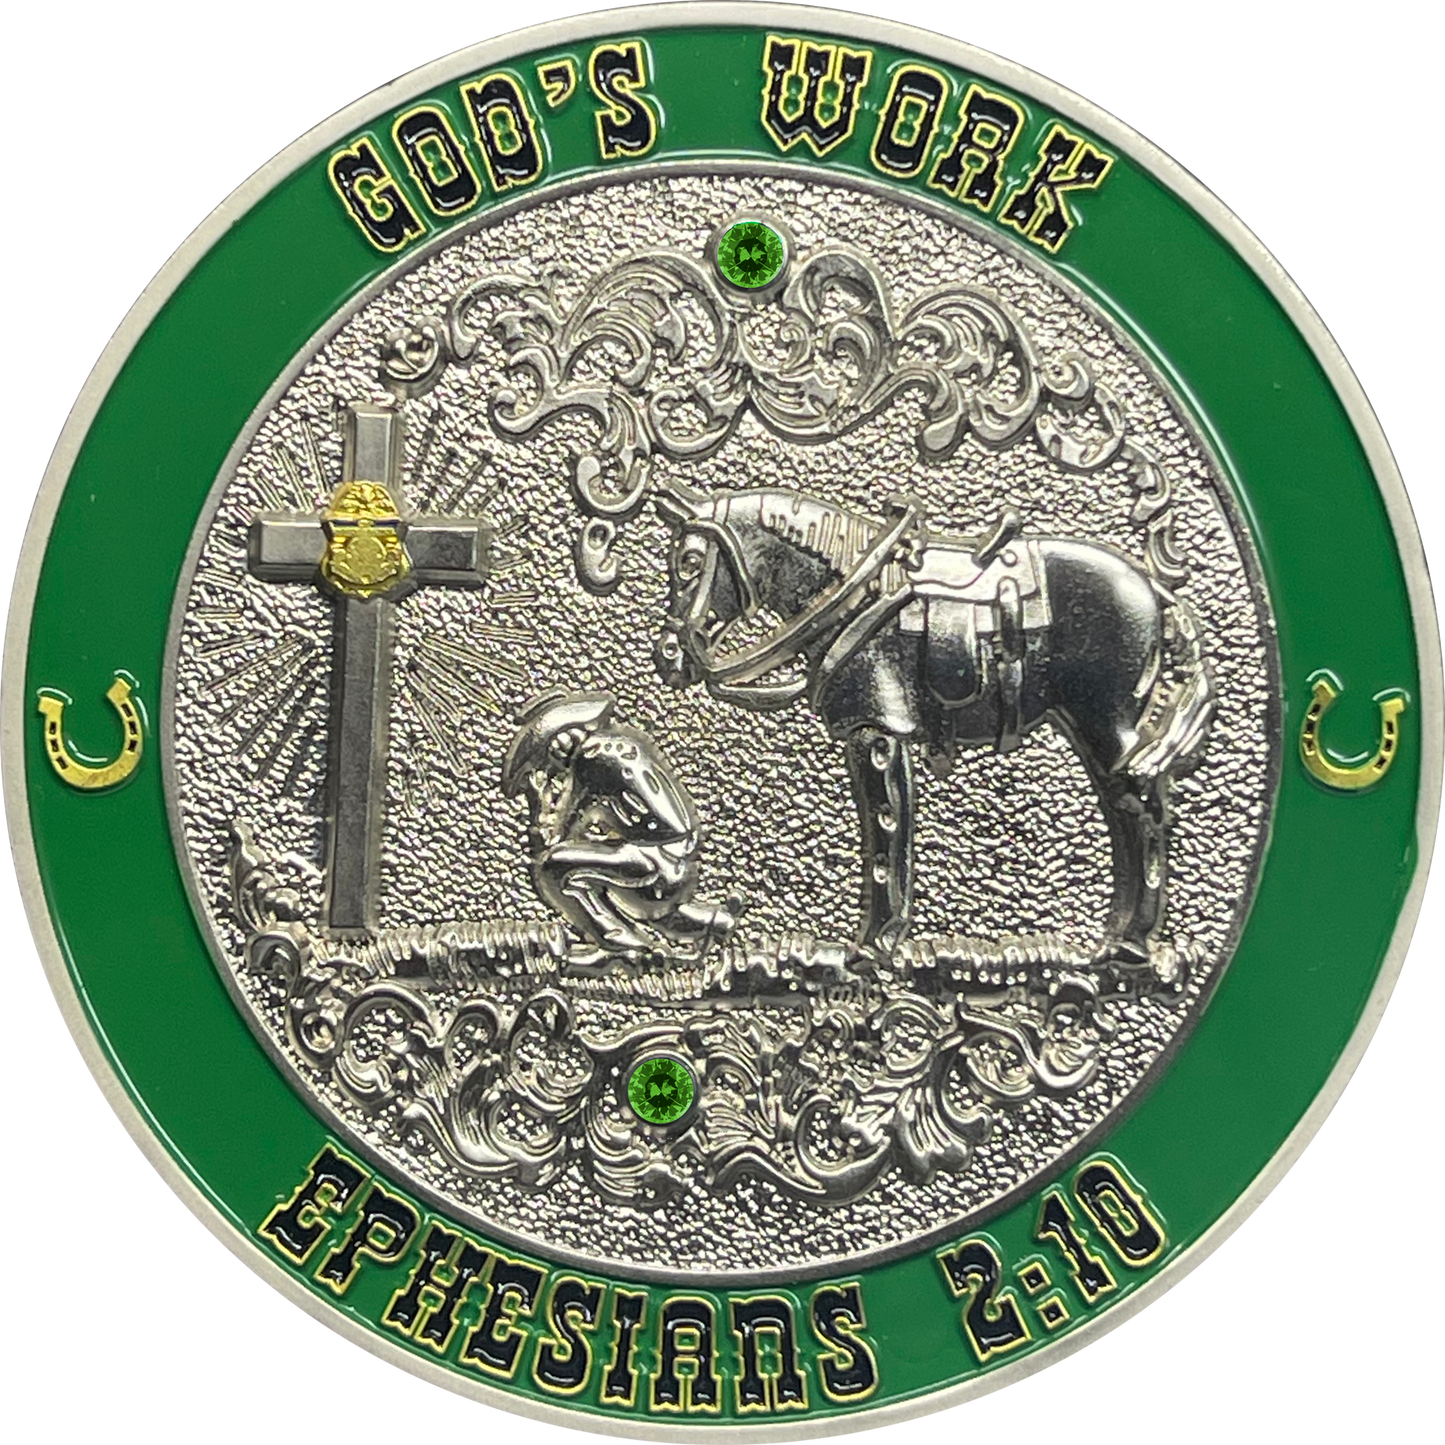 BL16-008 CBP Border Patrol Agent God's Work Gun Slinger Honor First Challenge Coin Horse Patrol